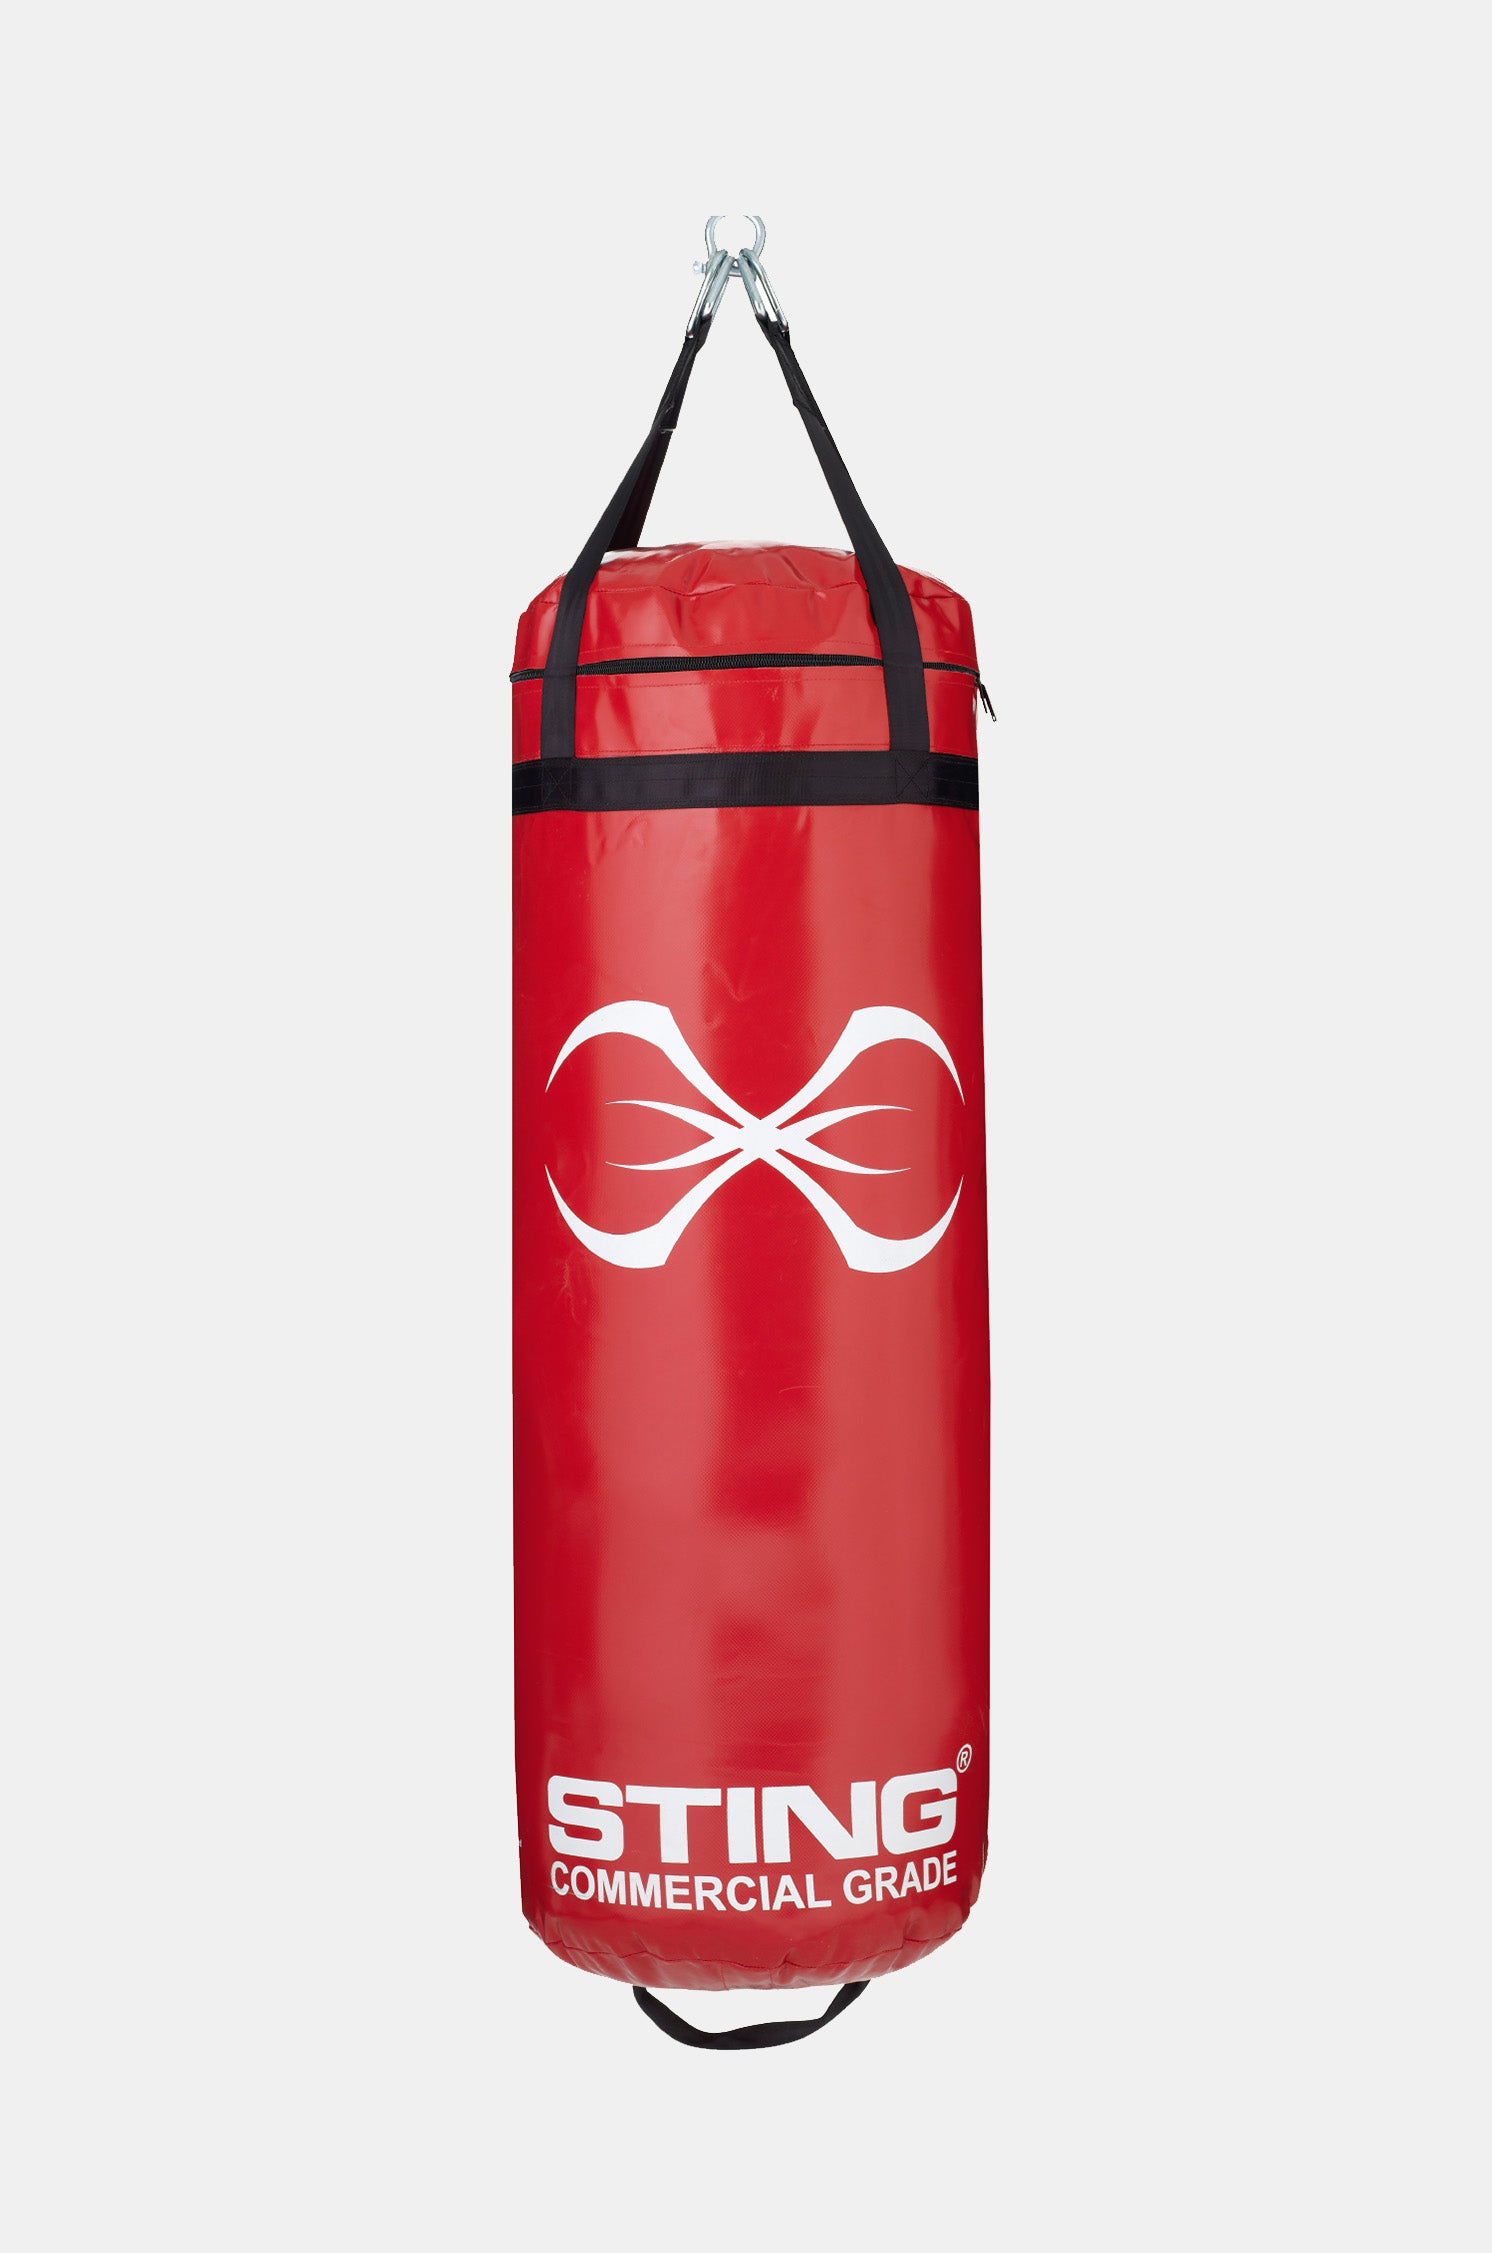 Contender Fight Sports Body Snatcher 65 lb. Heavy Bag 